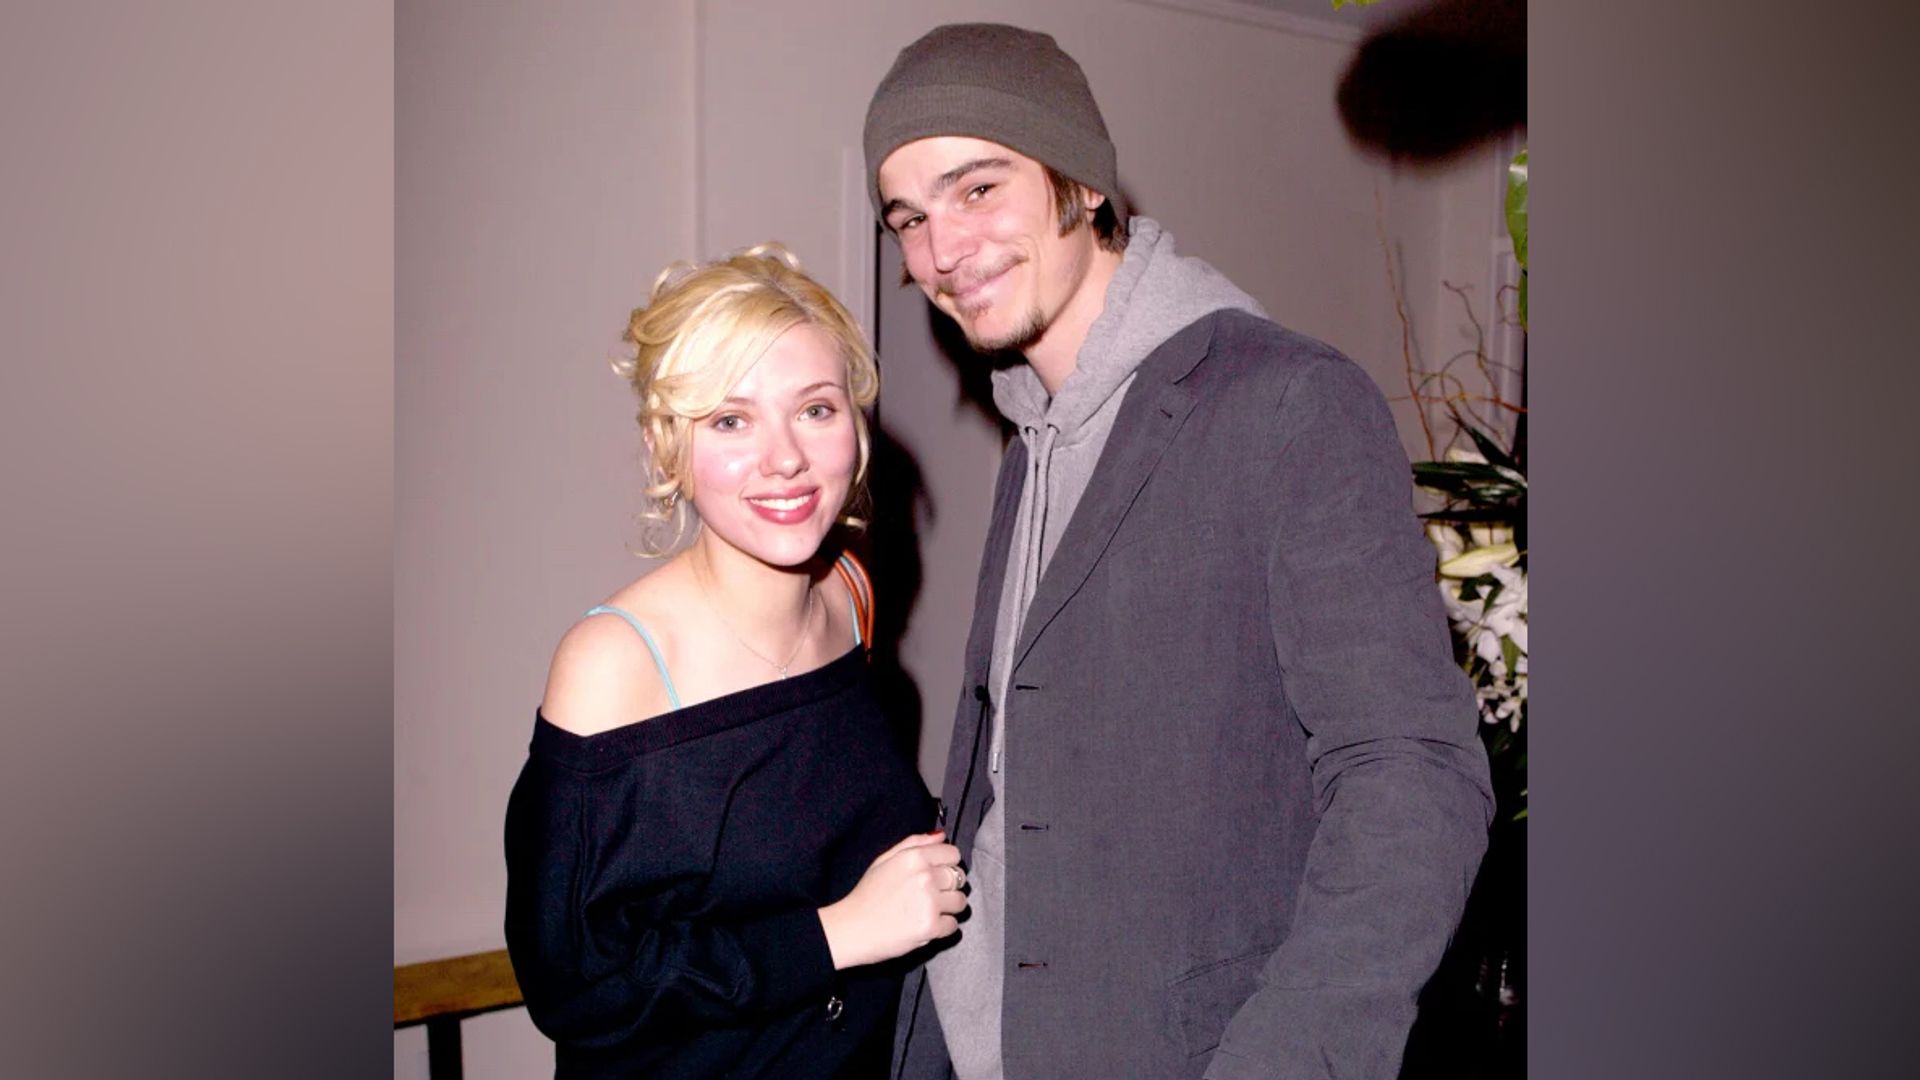 Josh Hartnett and Scarlett Johansson